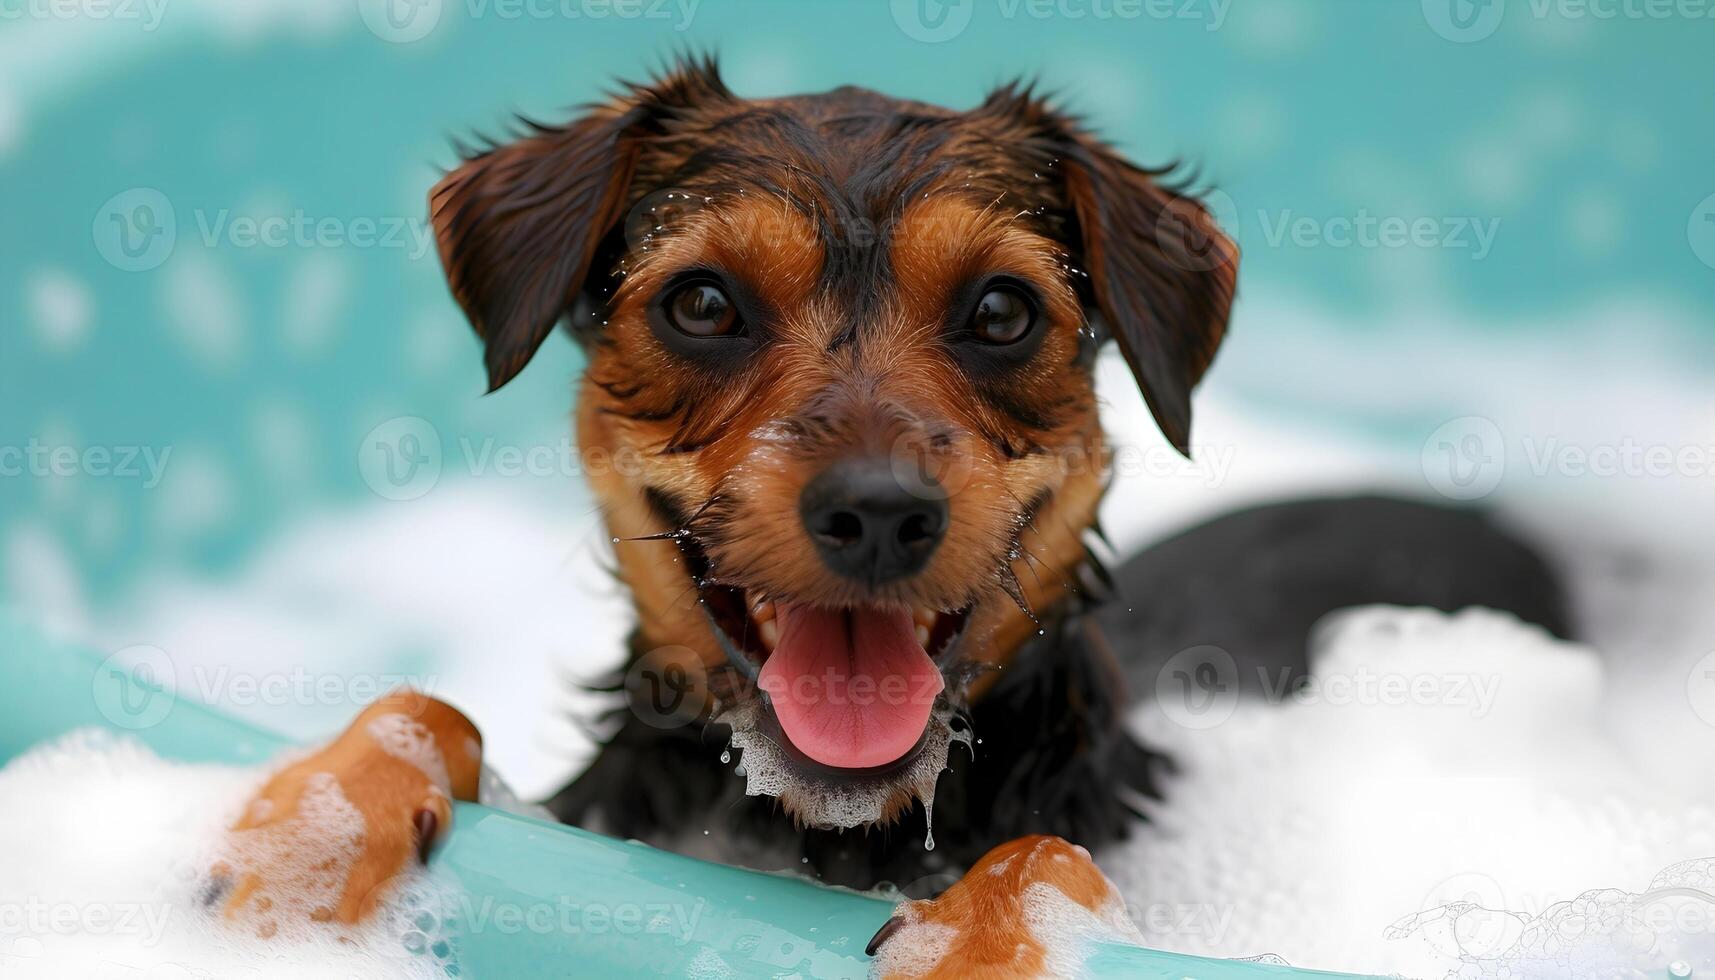 Funny dog taking a bath with soap foam. Portrait of a cute little wet dog. photo